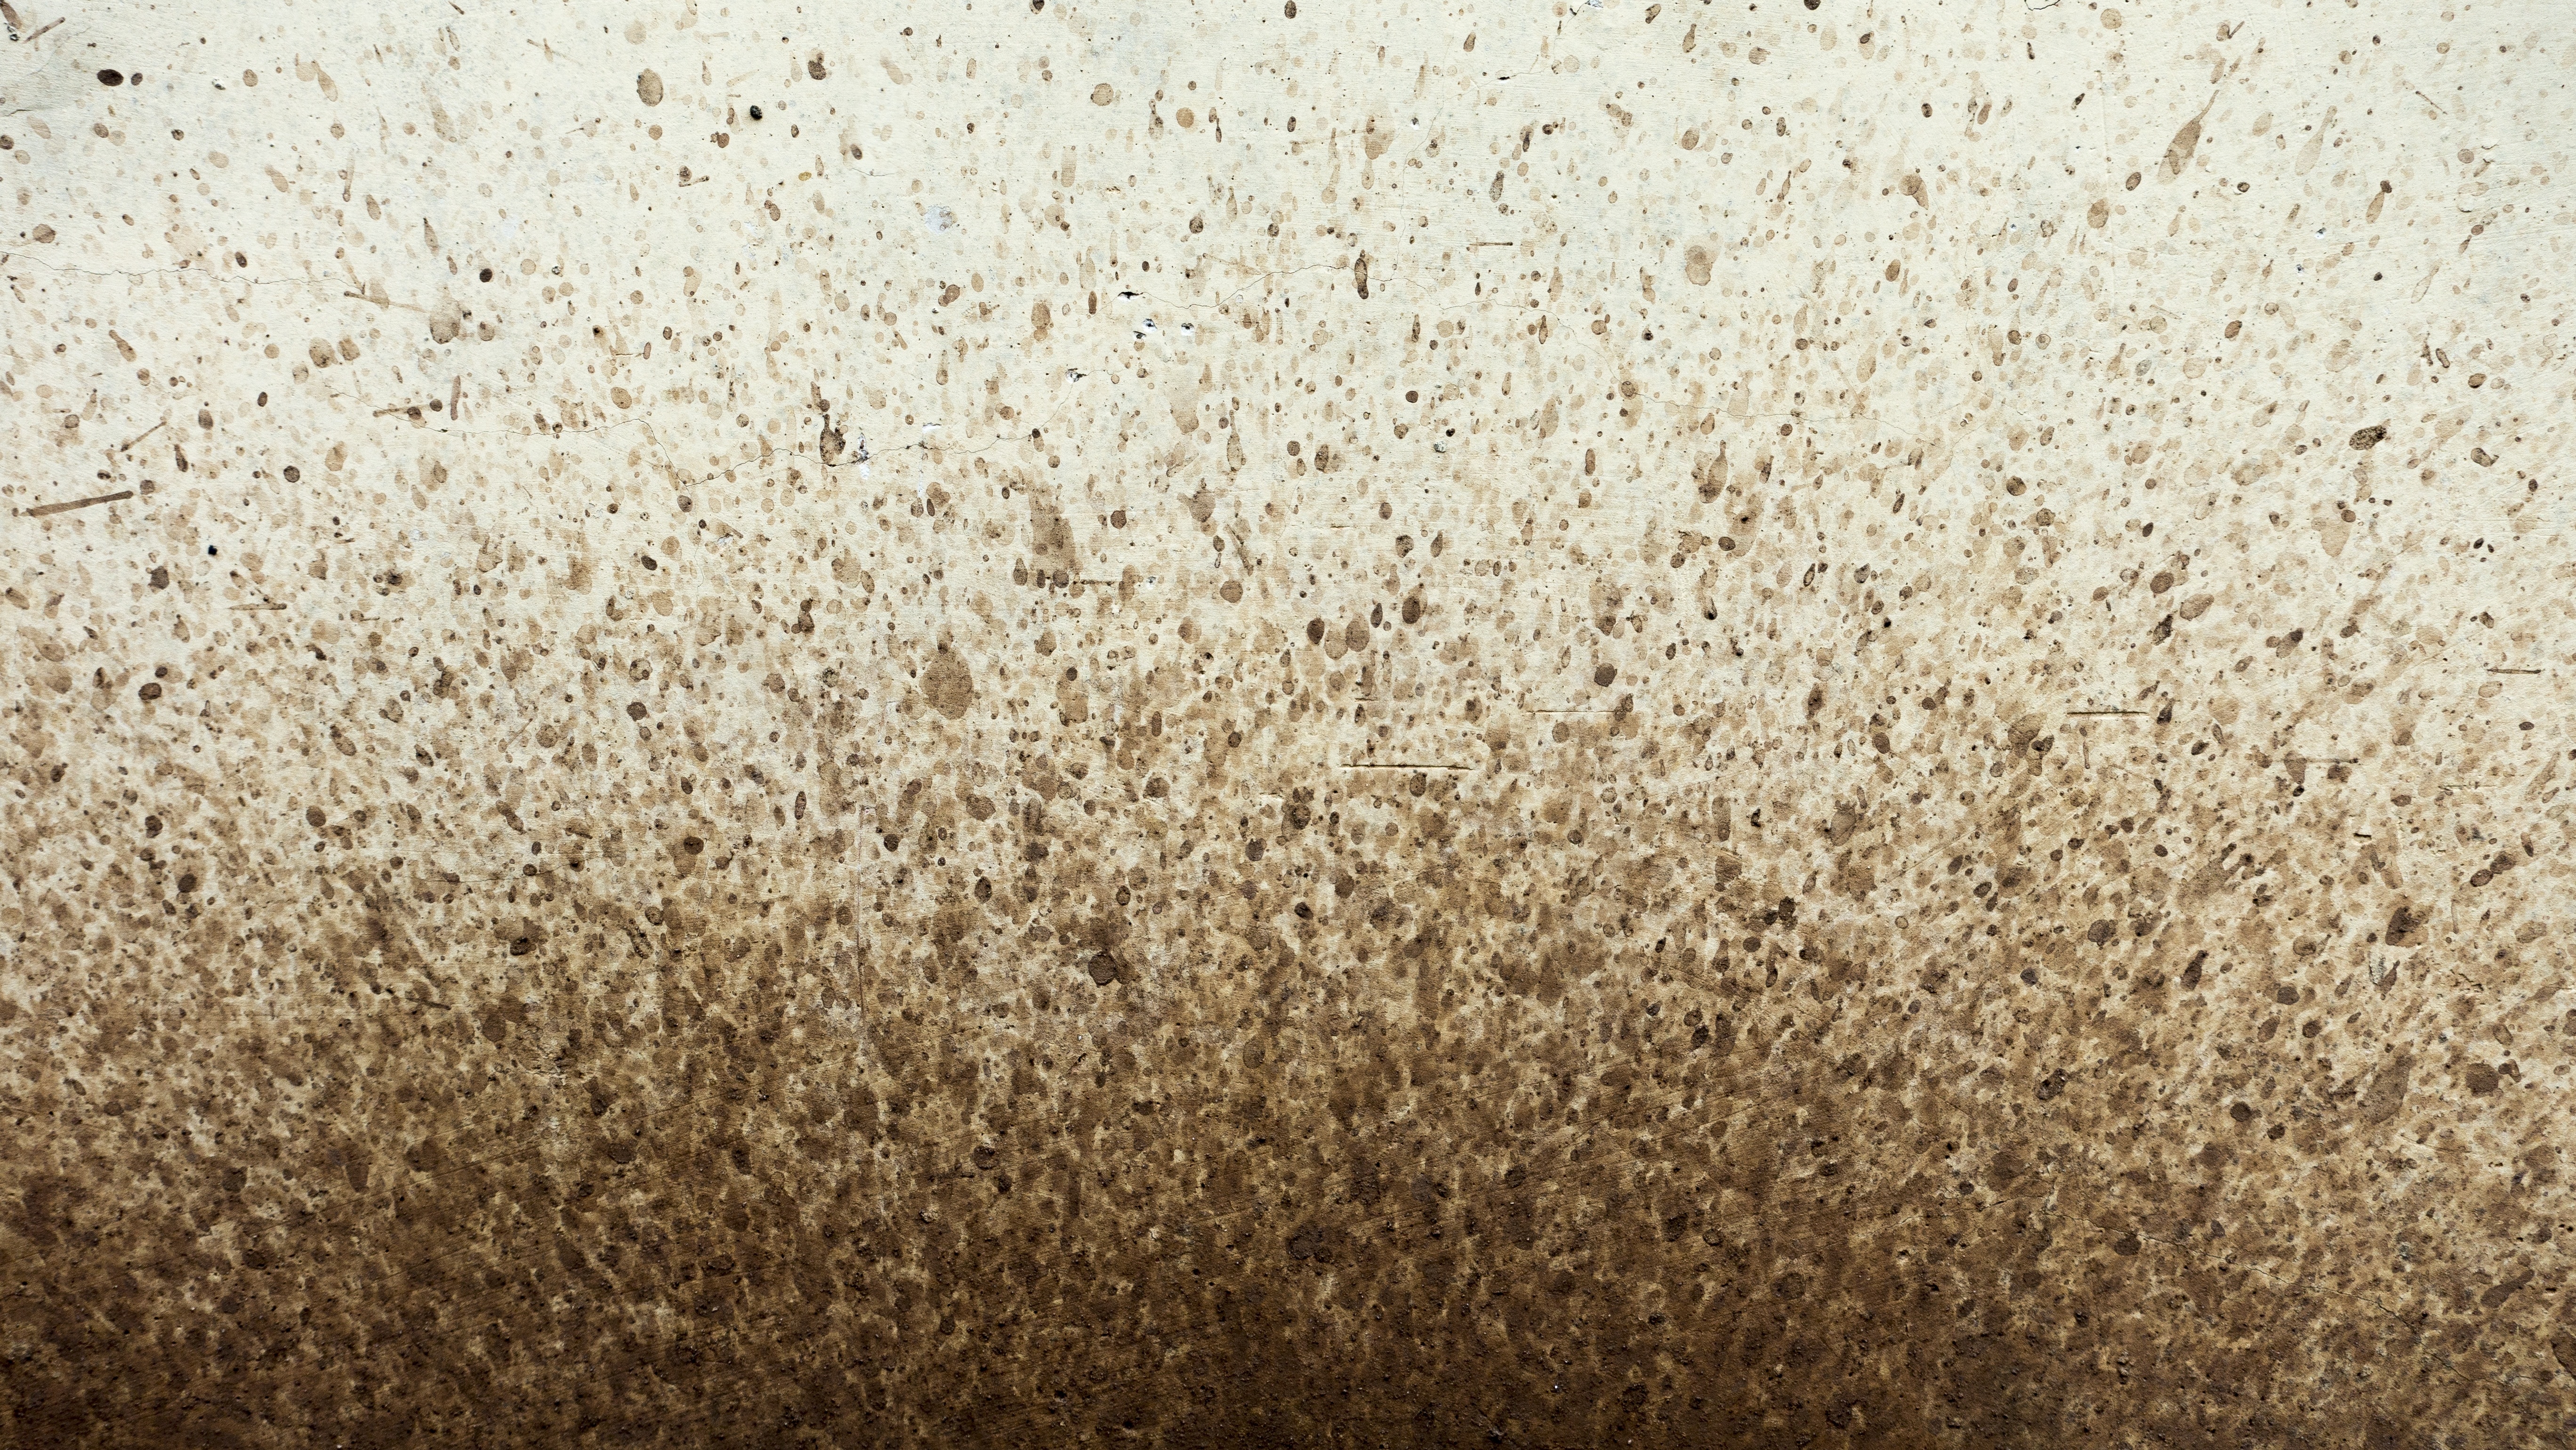 Splatter, Wall, Mud, Texture, Background, backgrounds, textured